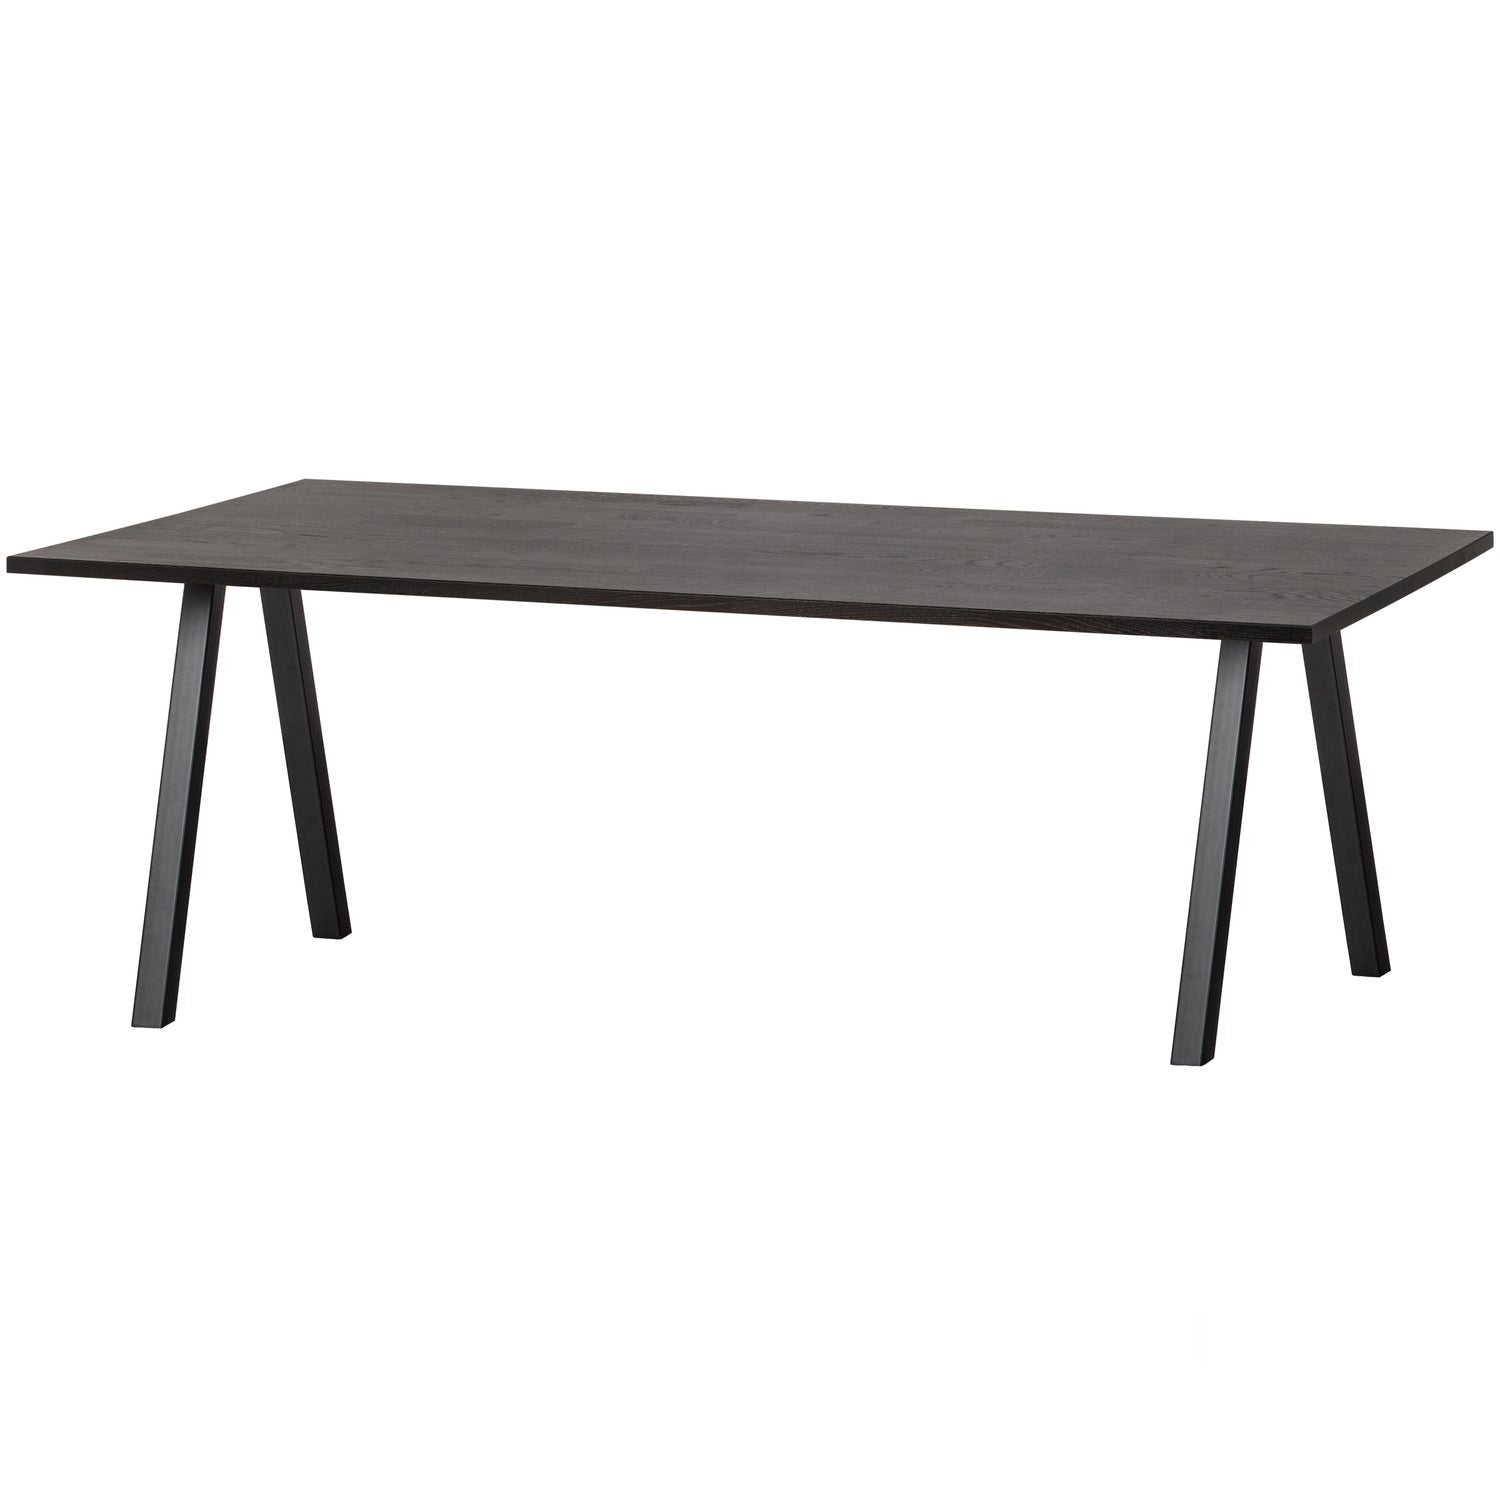 TABLO TABLE OAK BLACKNIGHT 220X90 [fsc] & SQUARE LEG